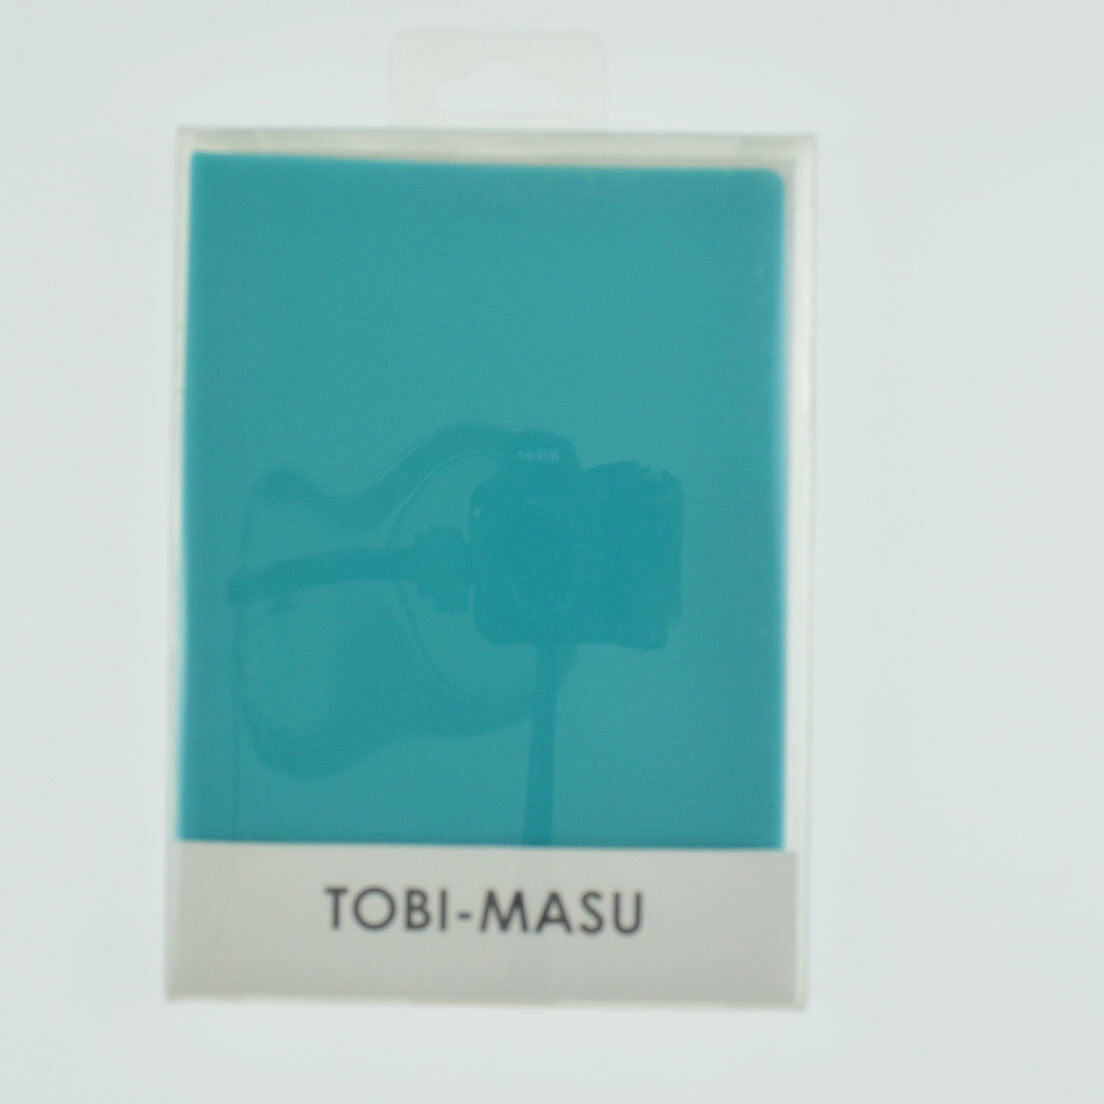 TOBI-MASU p+g design Silicone Passport Cover Waterproof Passport Holder Case